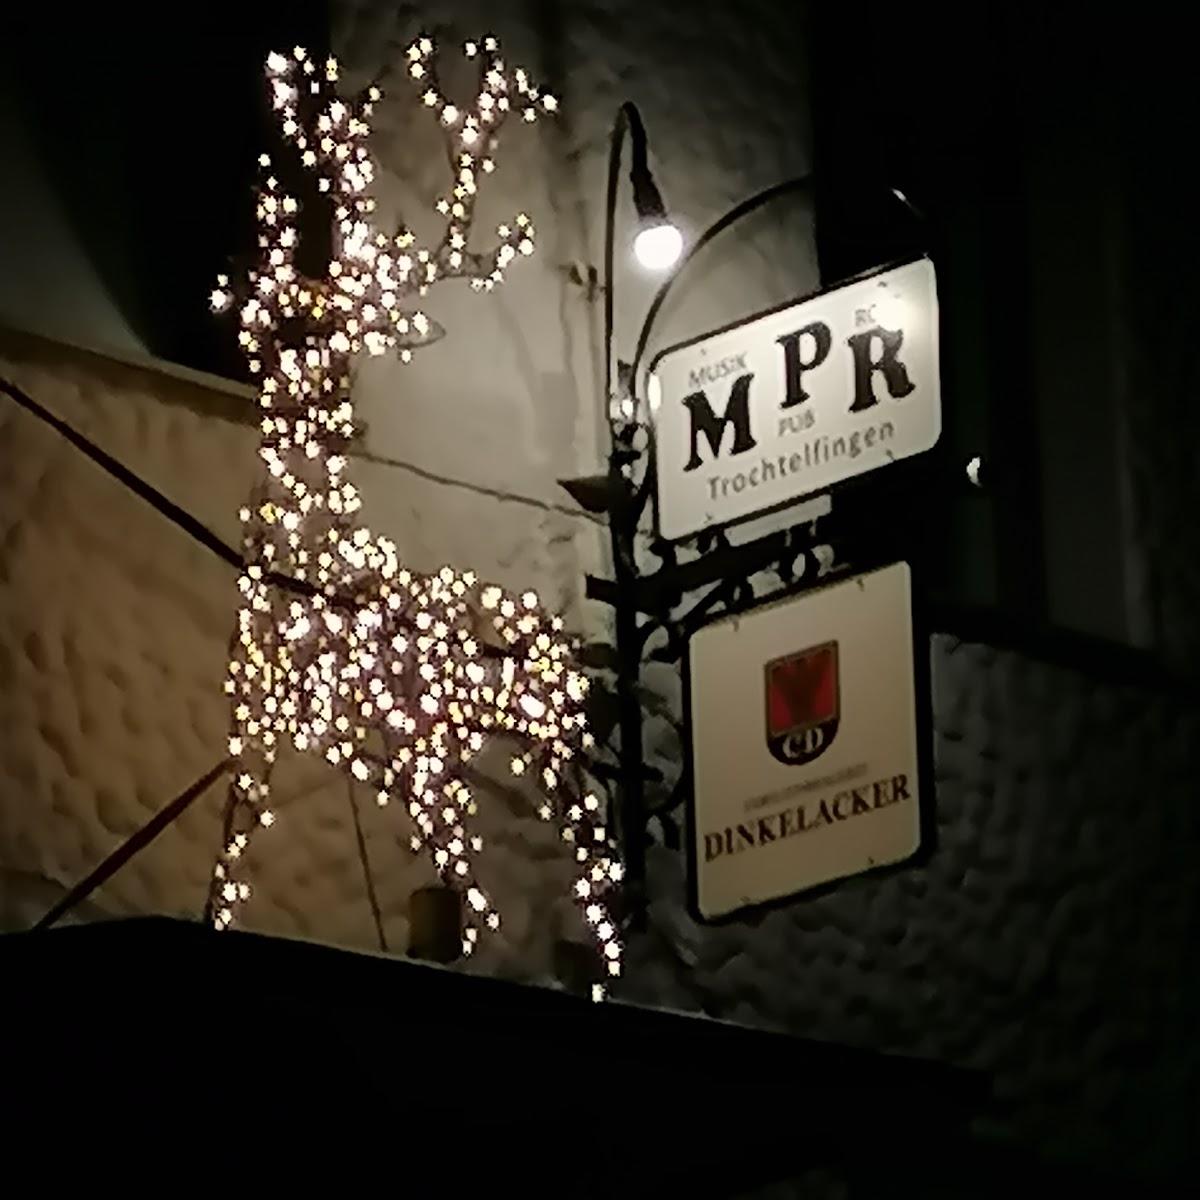 Restaurant "MusikPubRose" in Trochtelfingen